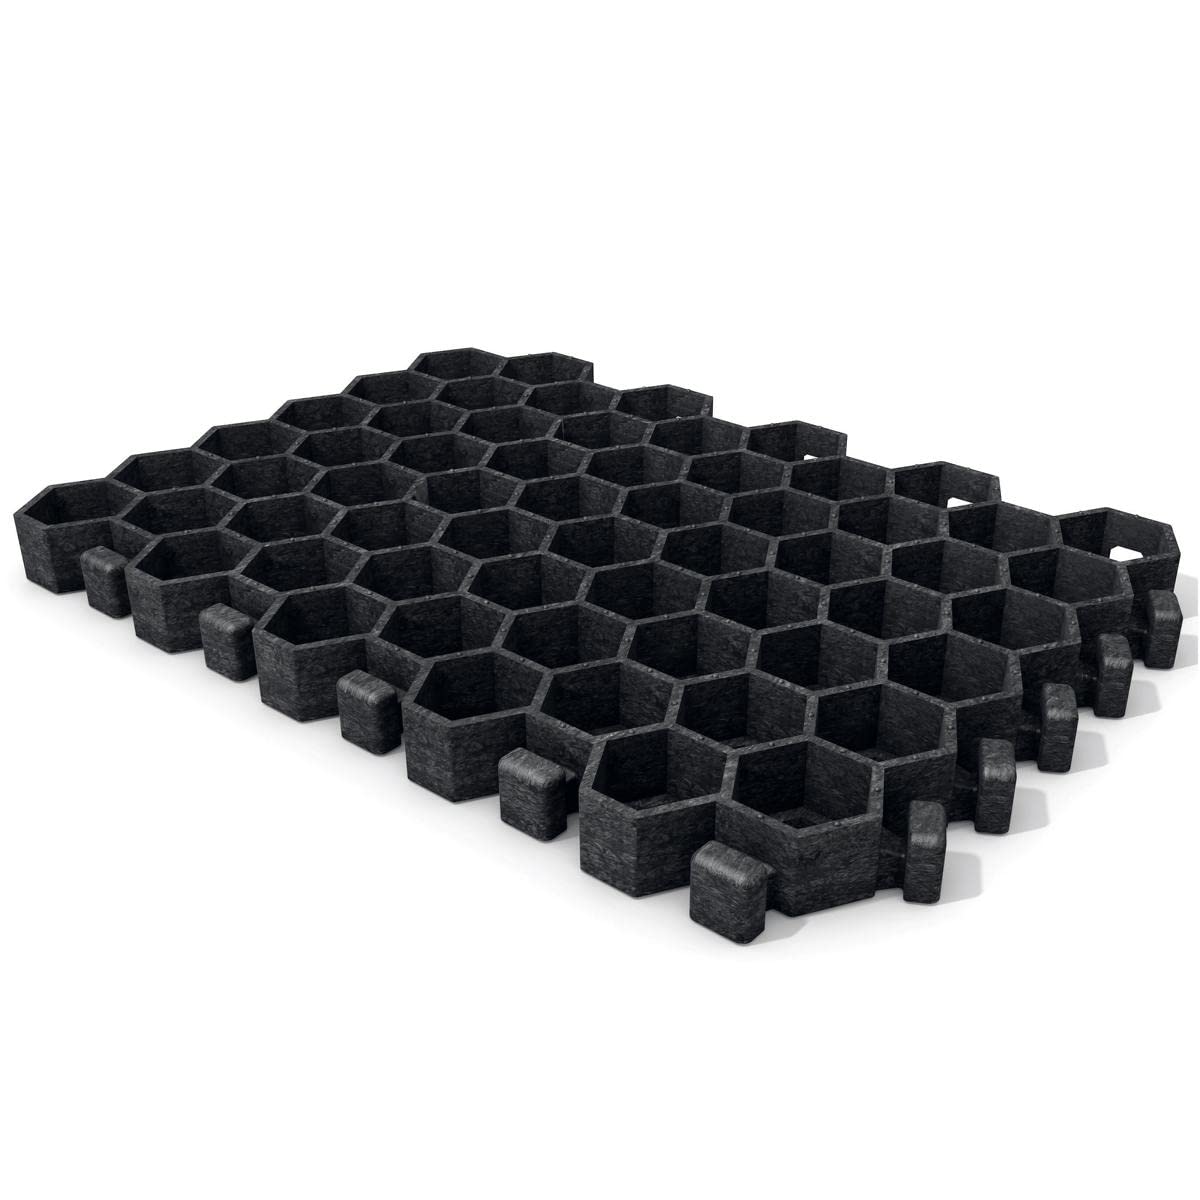 hanit Paddockplatten aus Recycling Kunststoff, hochstabile Pferde Paddock Befestigung, schwarz (20m²)